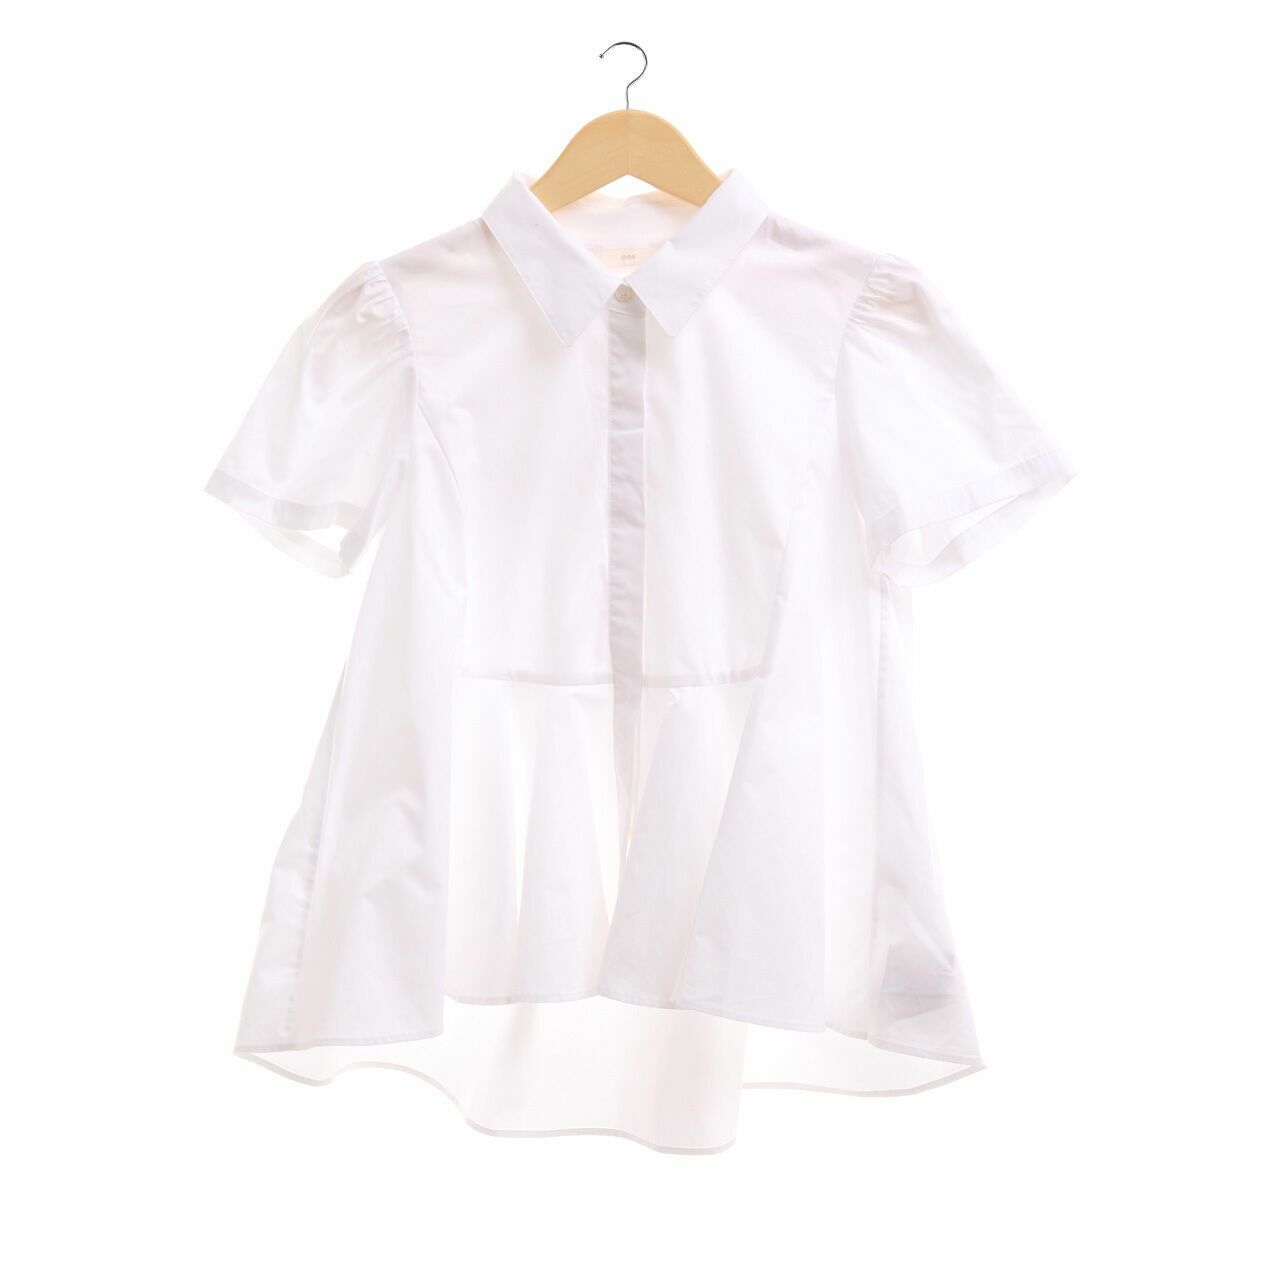 ORR White Shirt